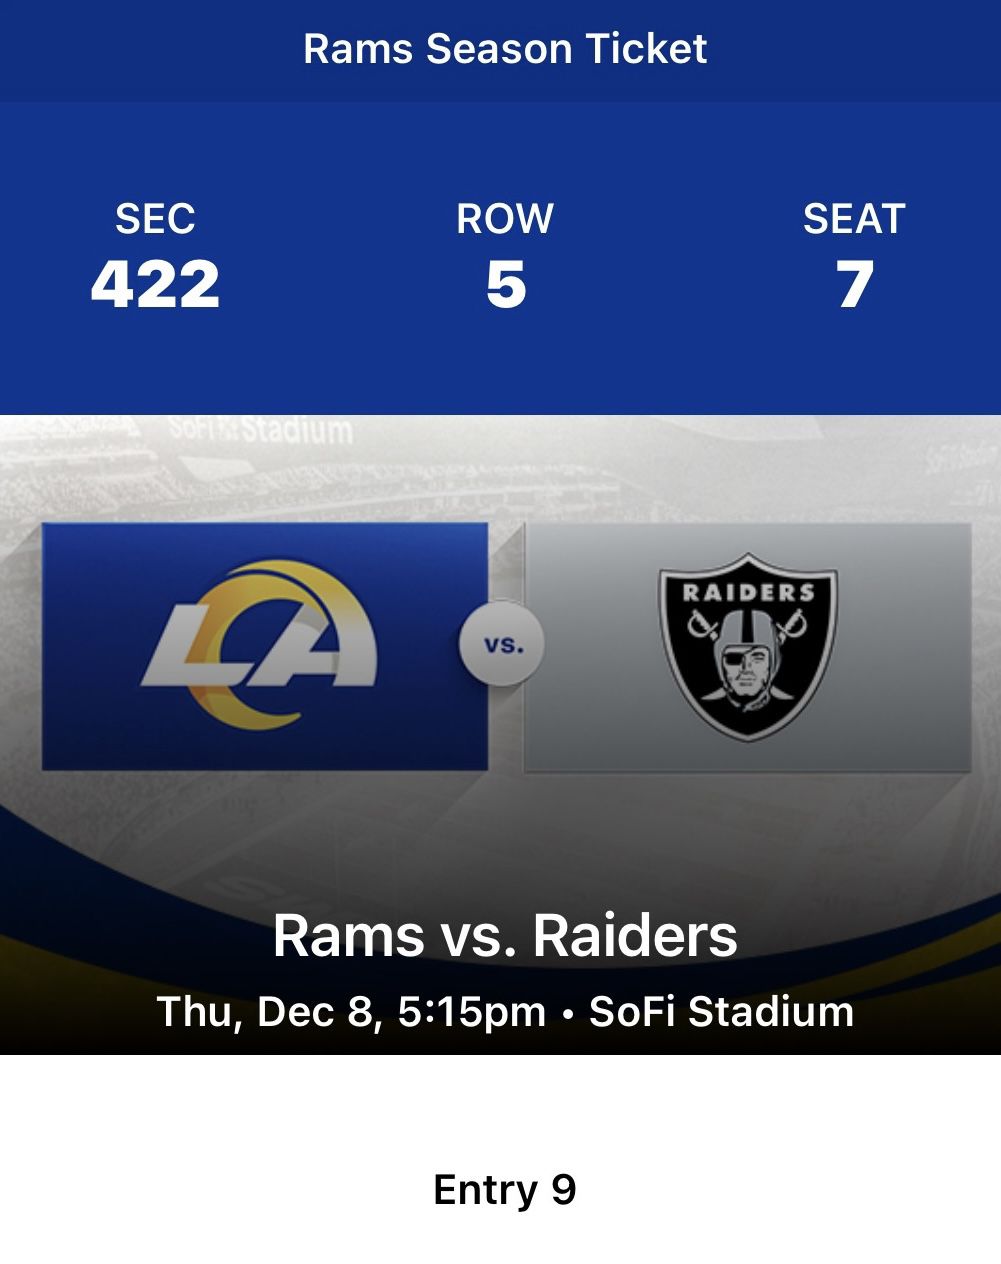 Rams Vs Raiders 1 Ticket Sec 422 Row 5 $175